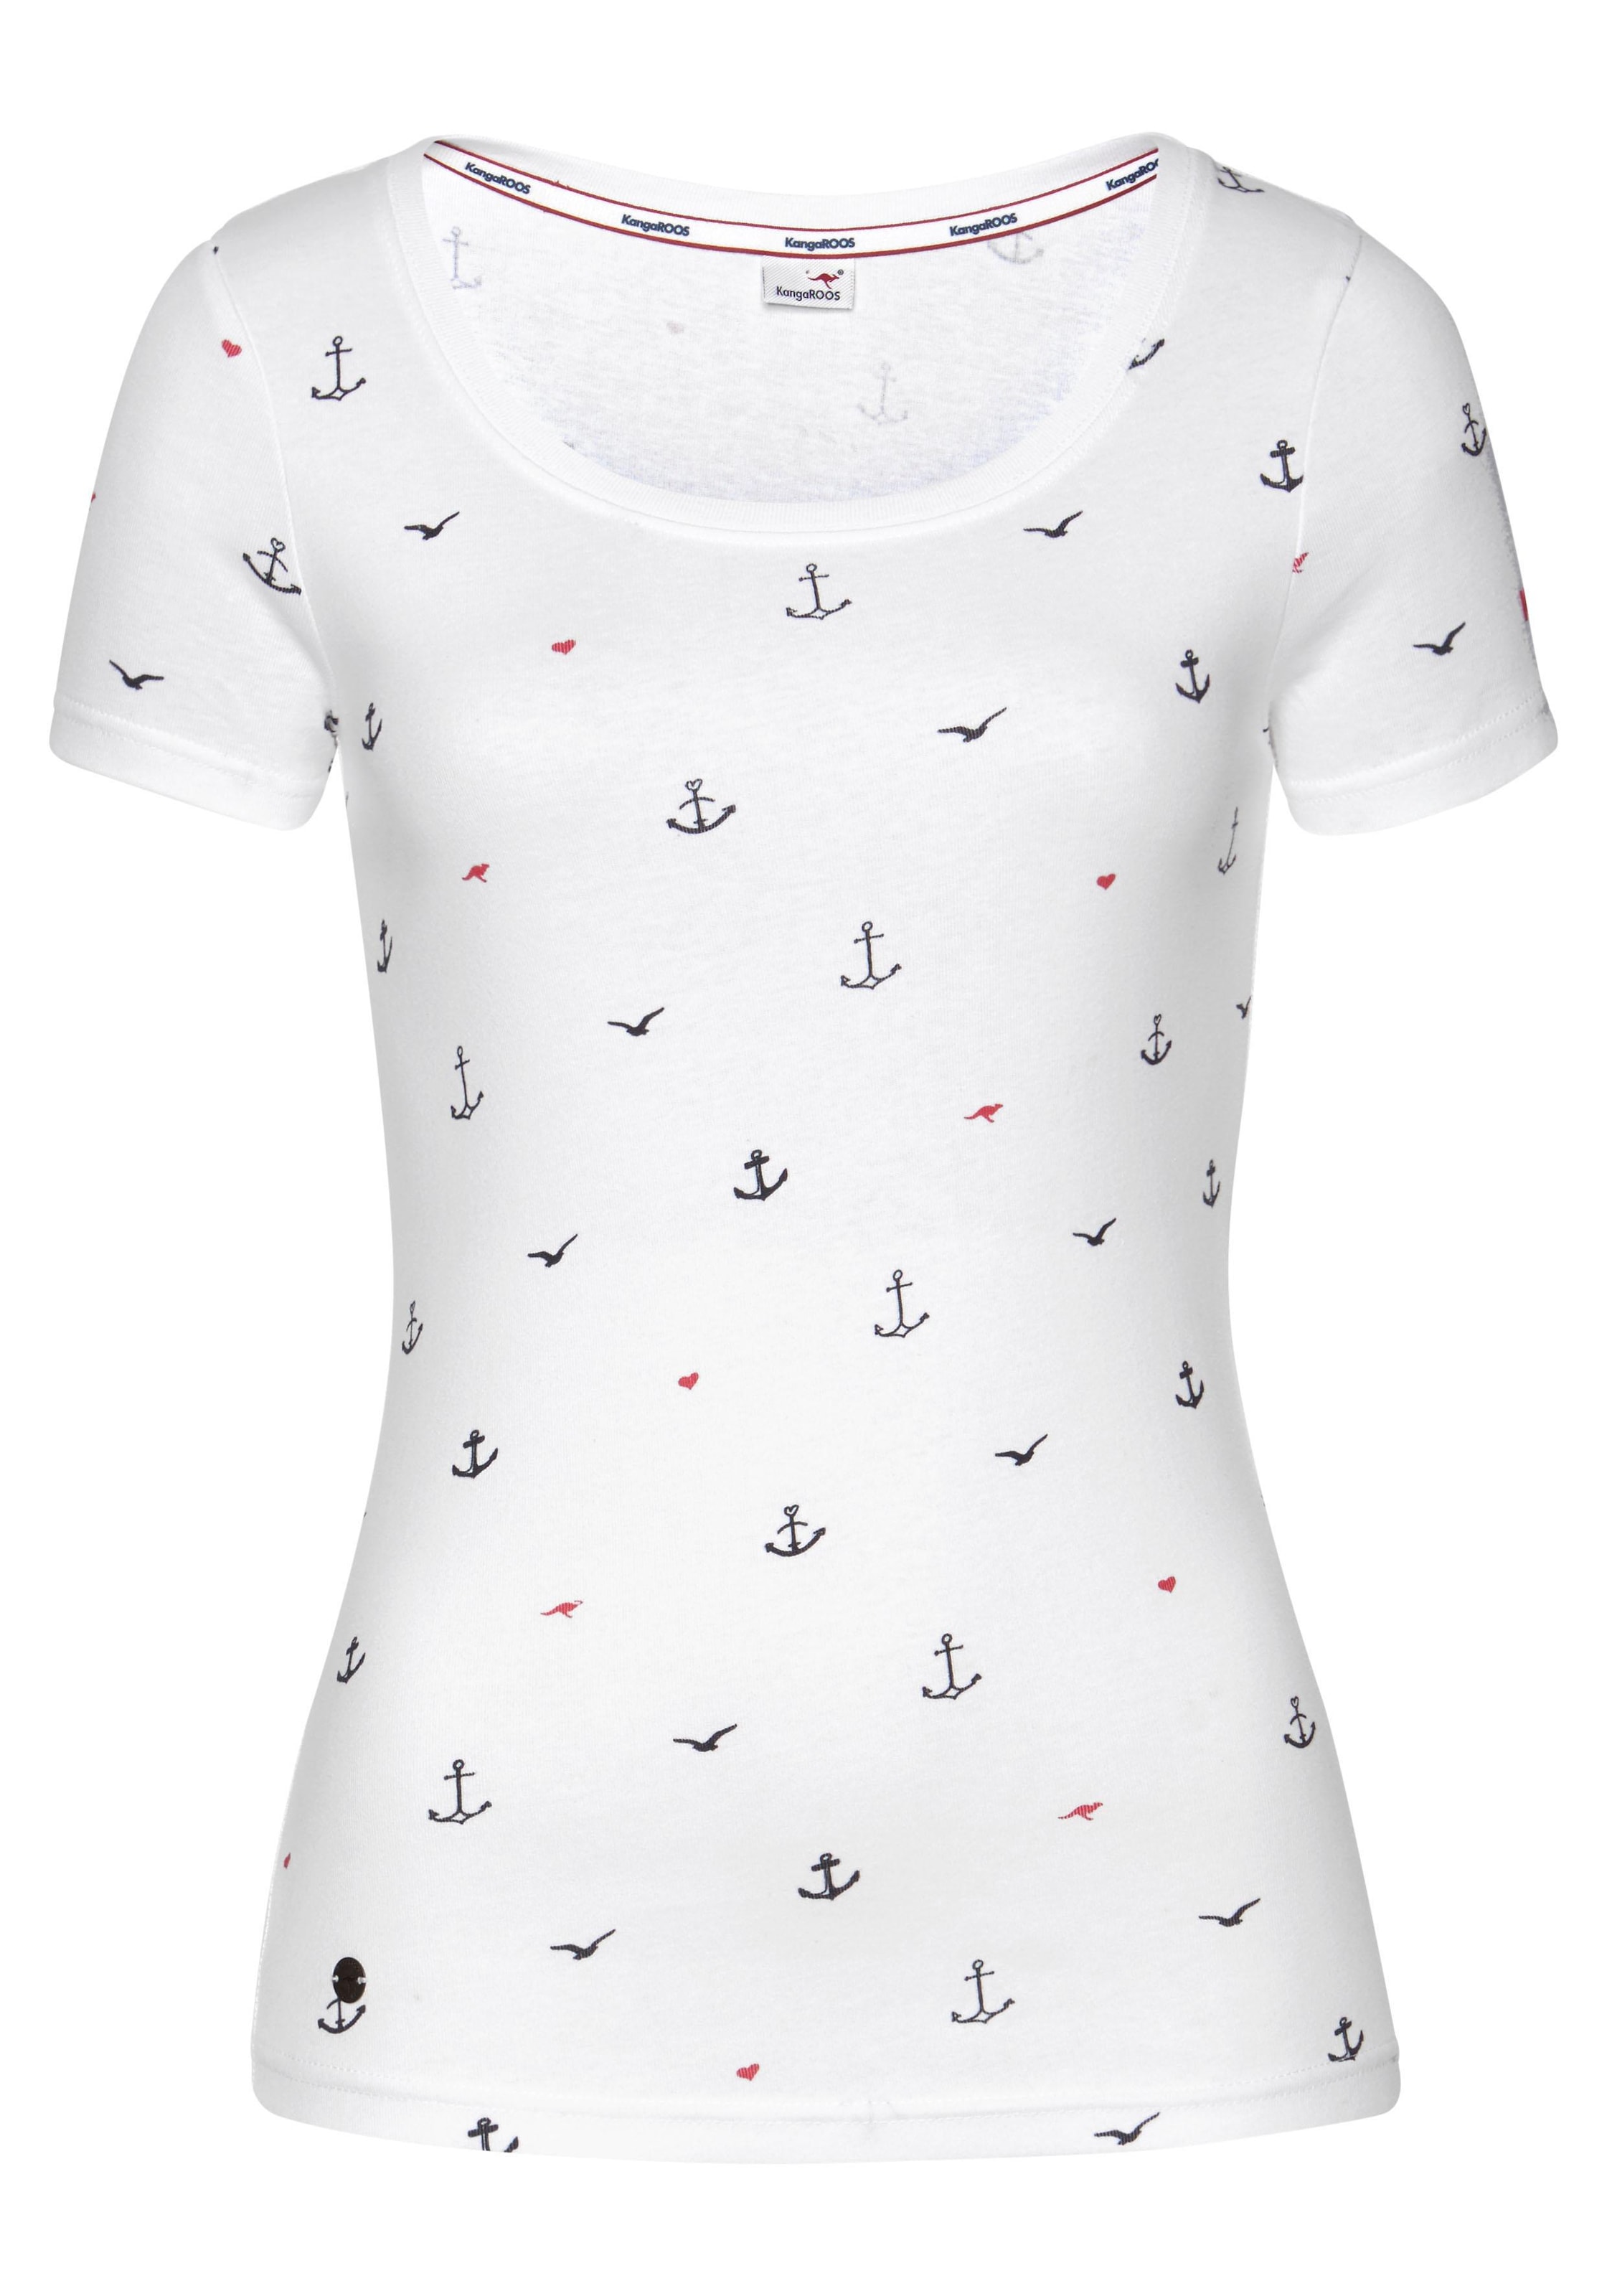 KangaROOS T-Shirt, shoppen oder mit Reh-Print Anker, Schiffchen